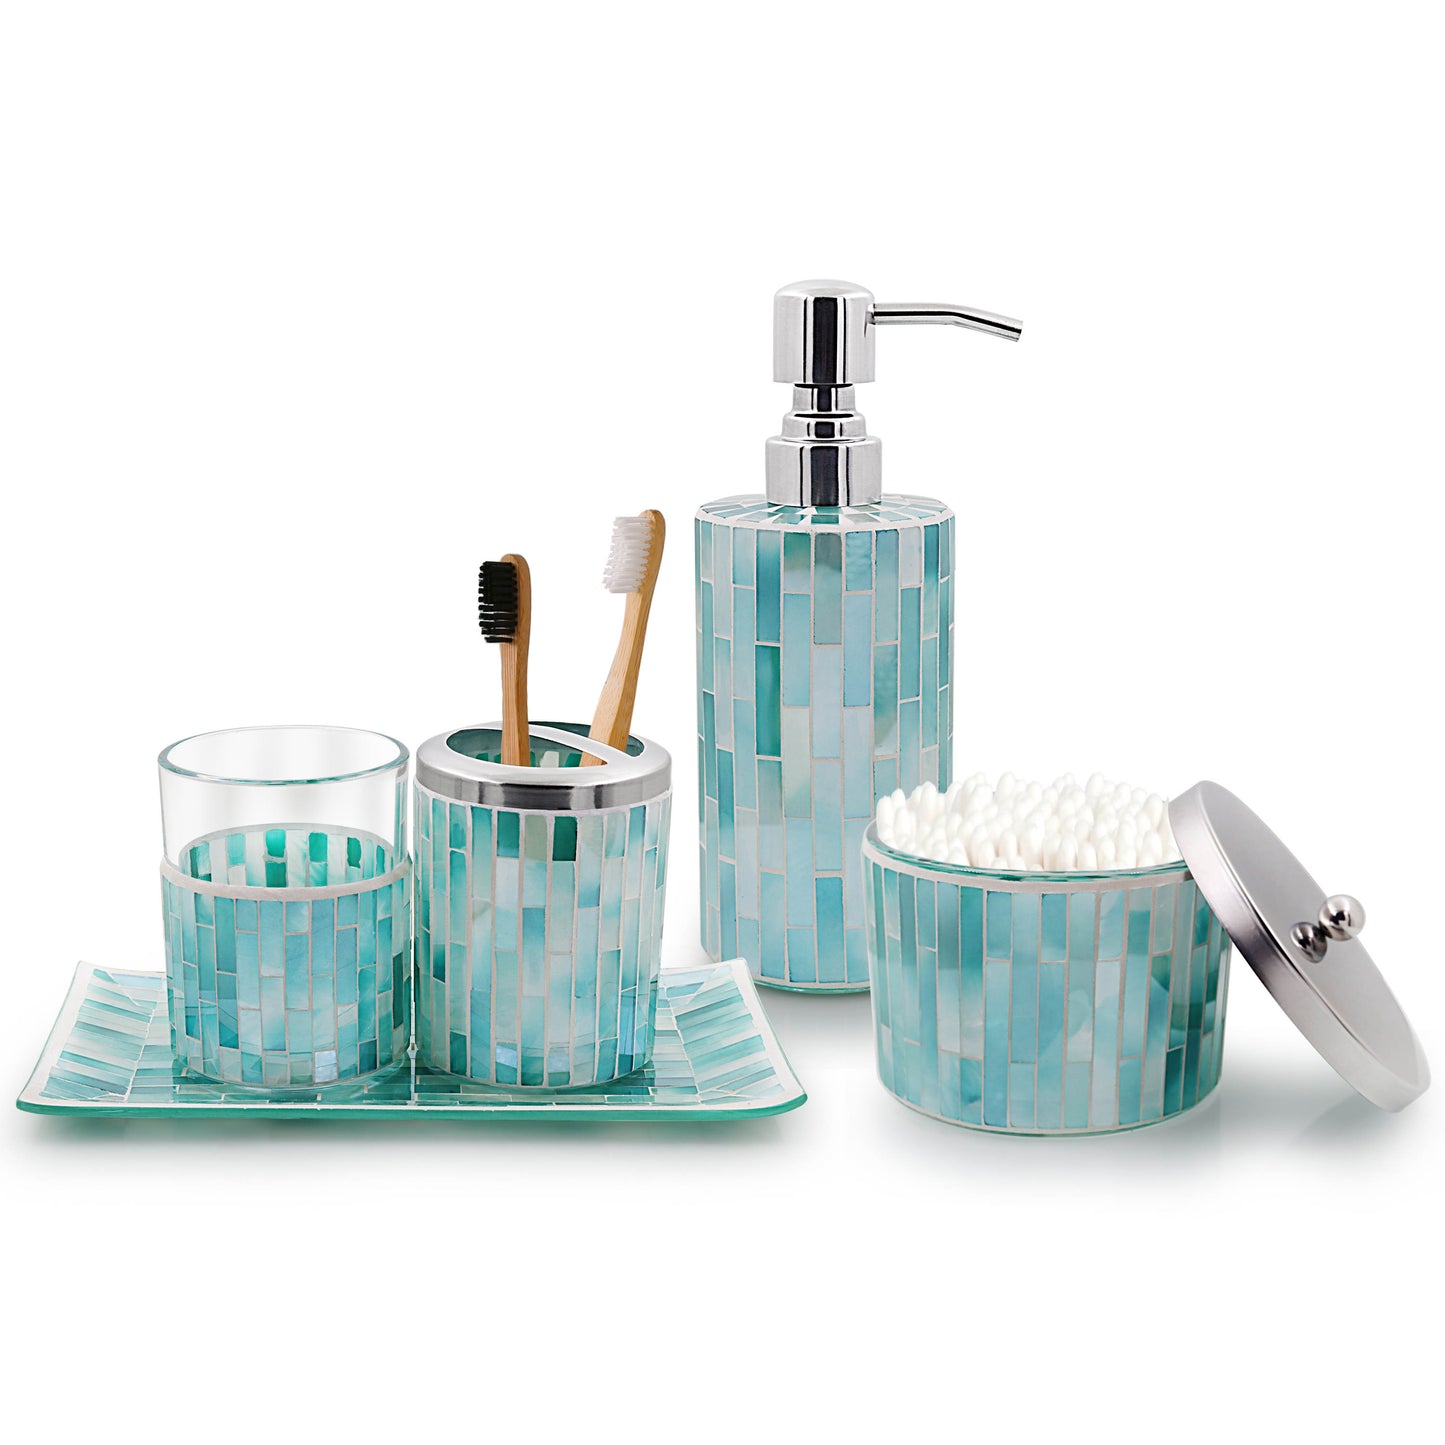 LushAccents Bathroom Accessories Set, 5-Piece Decorative Glass Bathroom Accessories Set, Soap Dispenser, Vanity Tray, Jar, Toothbrush Holder, Tumbler, Elegant Mosaic Glass